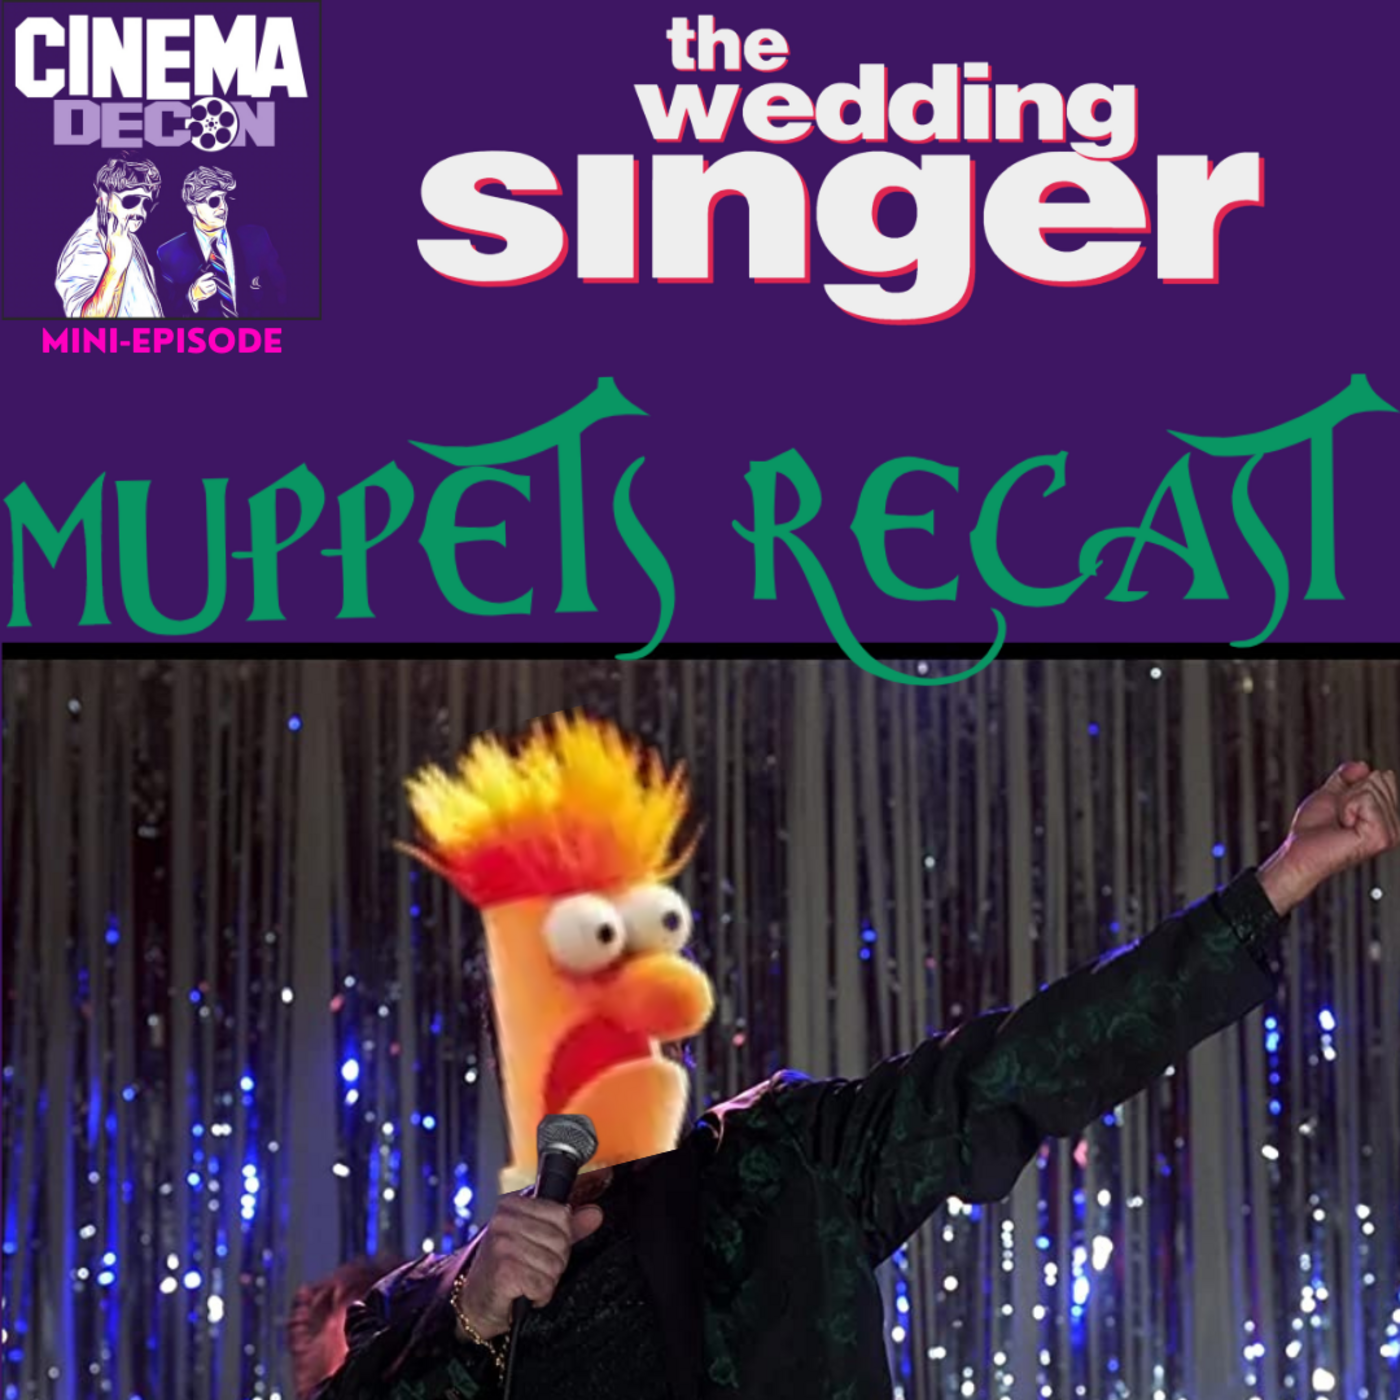 Mini-Episode: The Wedding Signer (1998) The Muppet Recast